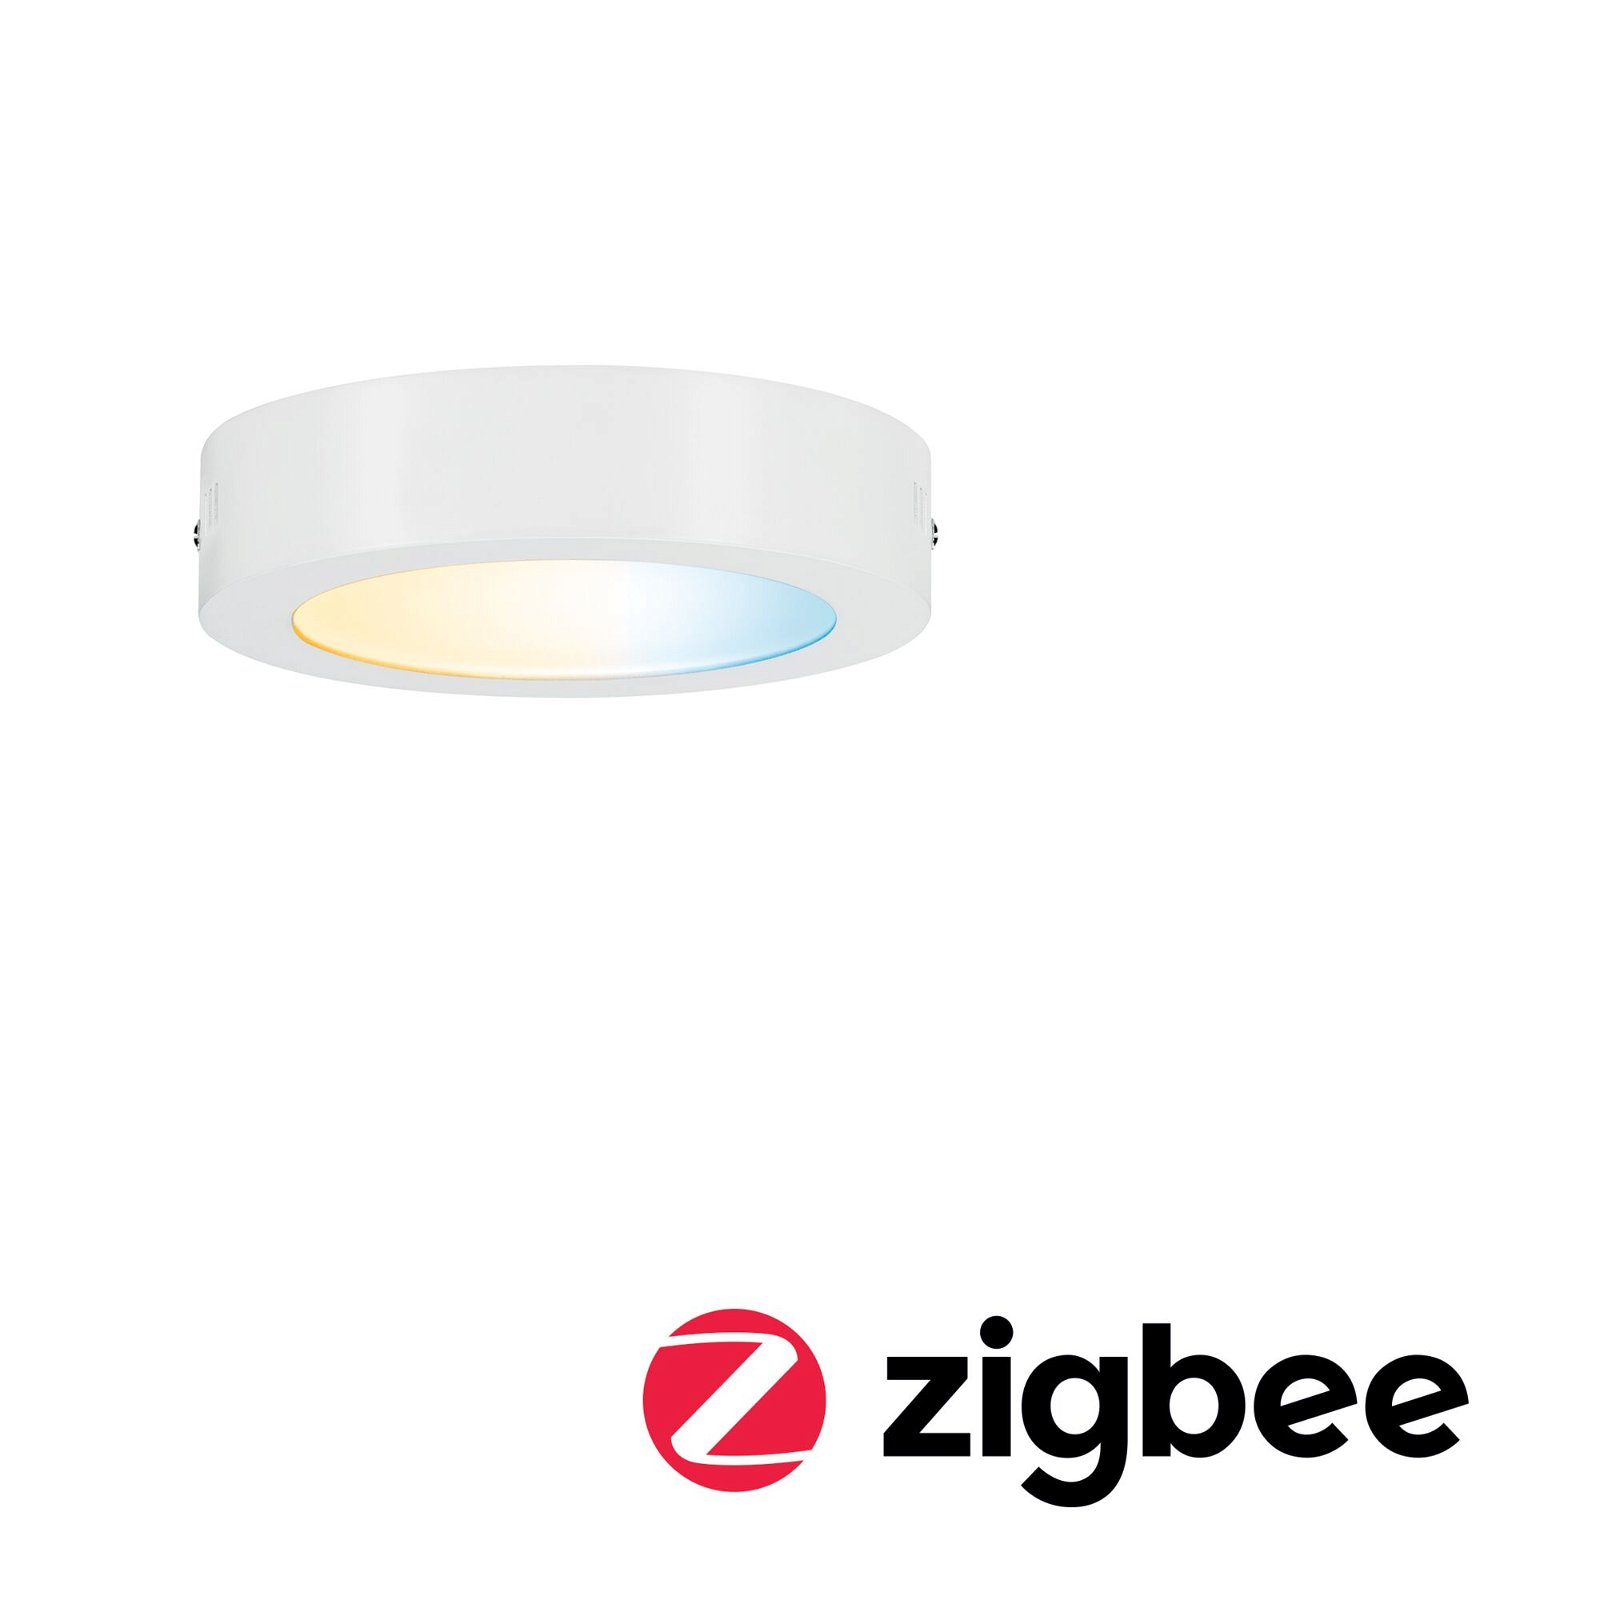 LED Panel Smart Home Zigbee Cesena round 170mm Tunable White Matt white dimmable